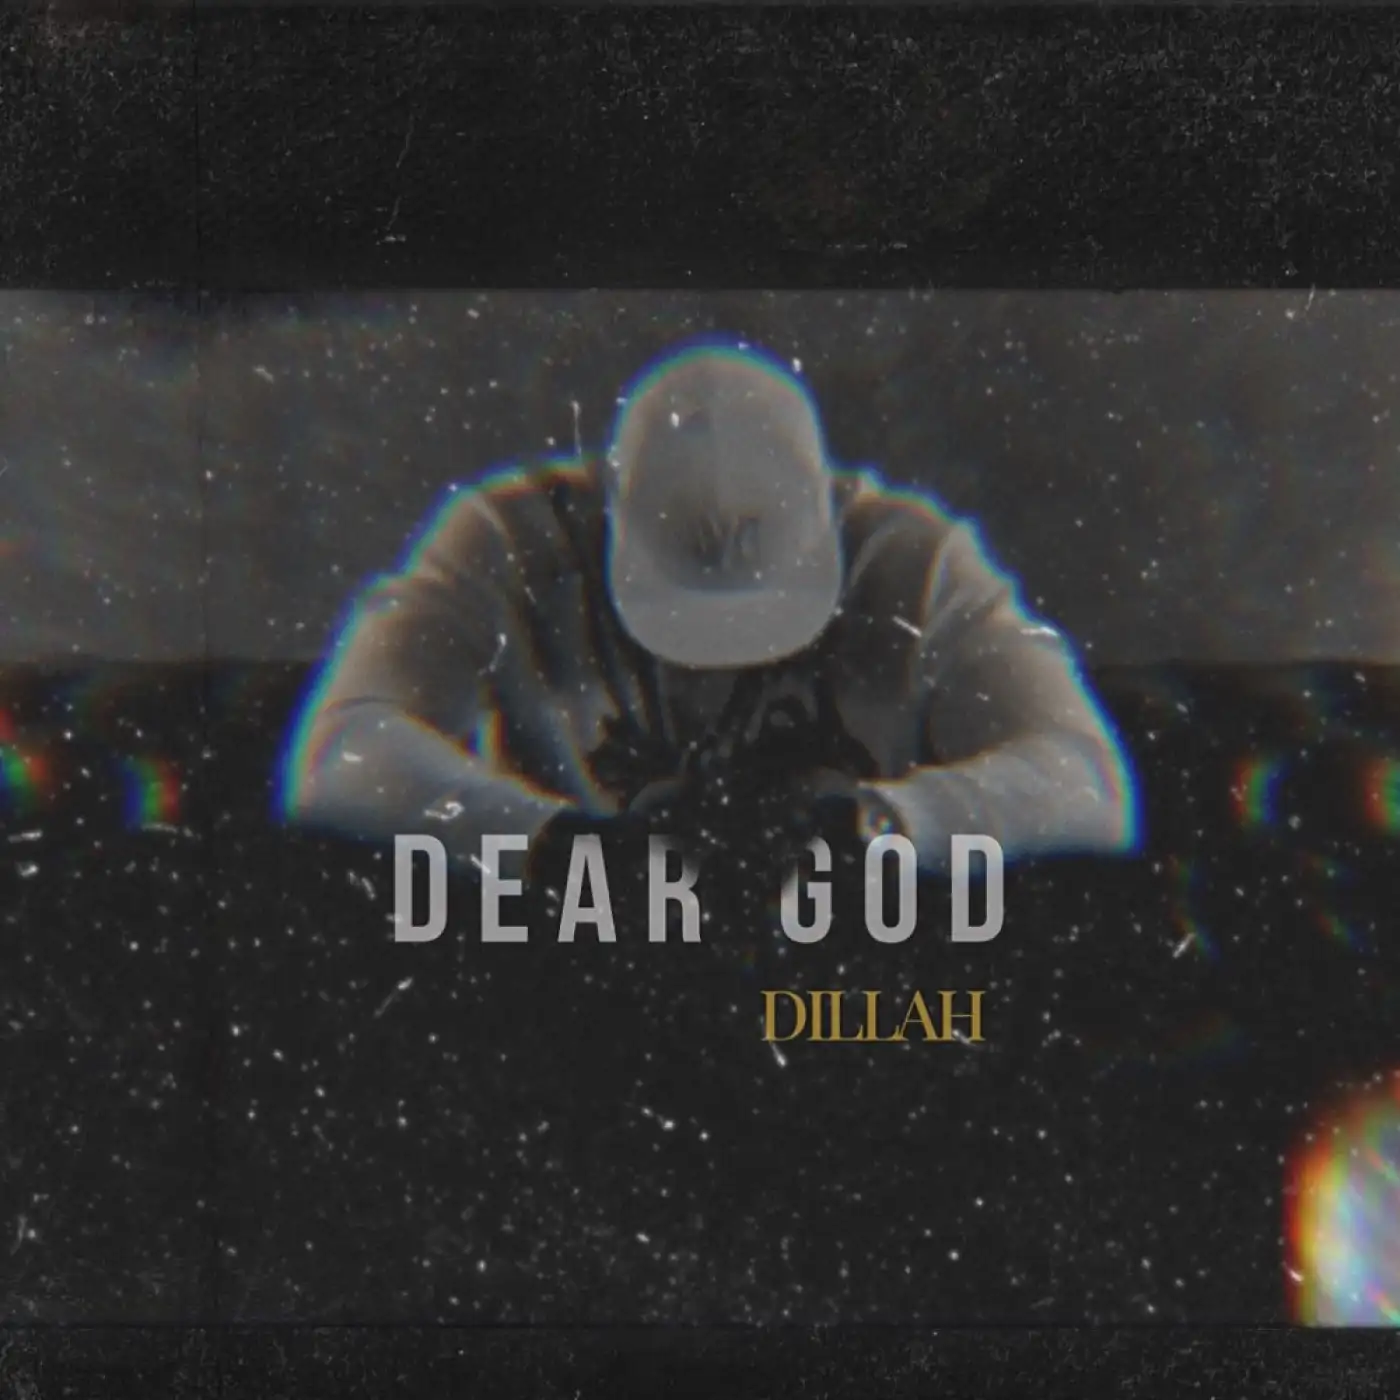 Dillah-Dillah - Dear God-song artwork cover